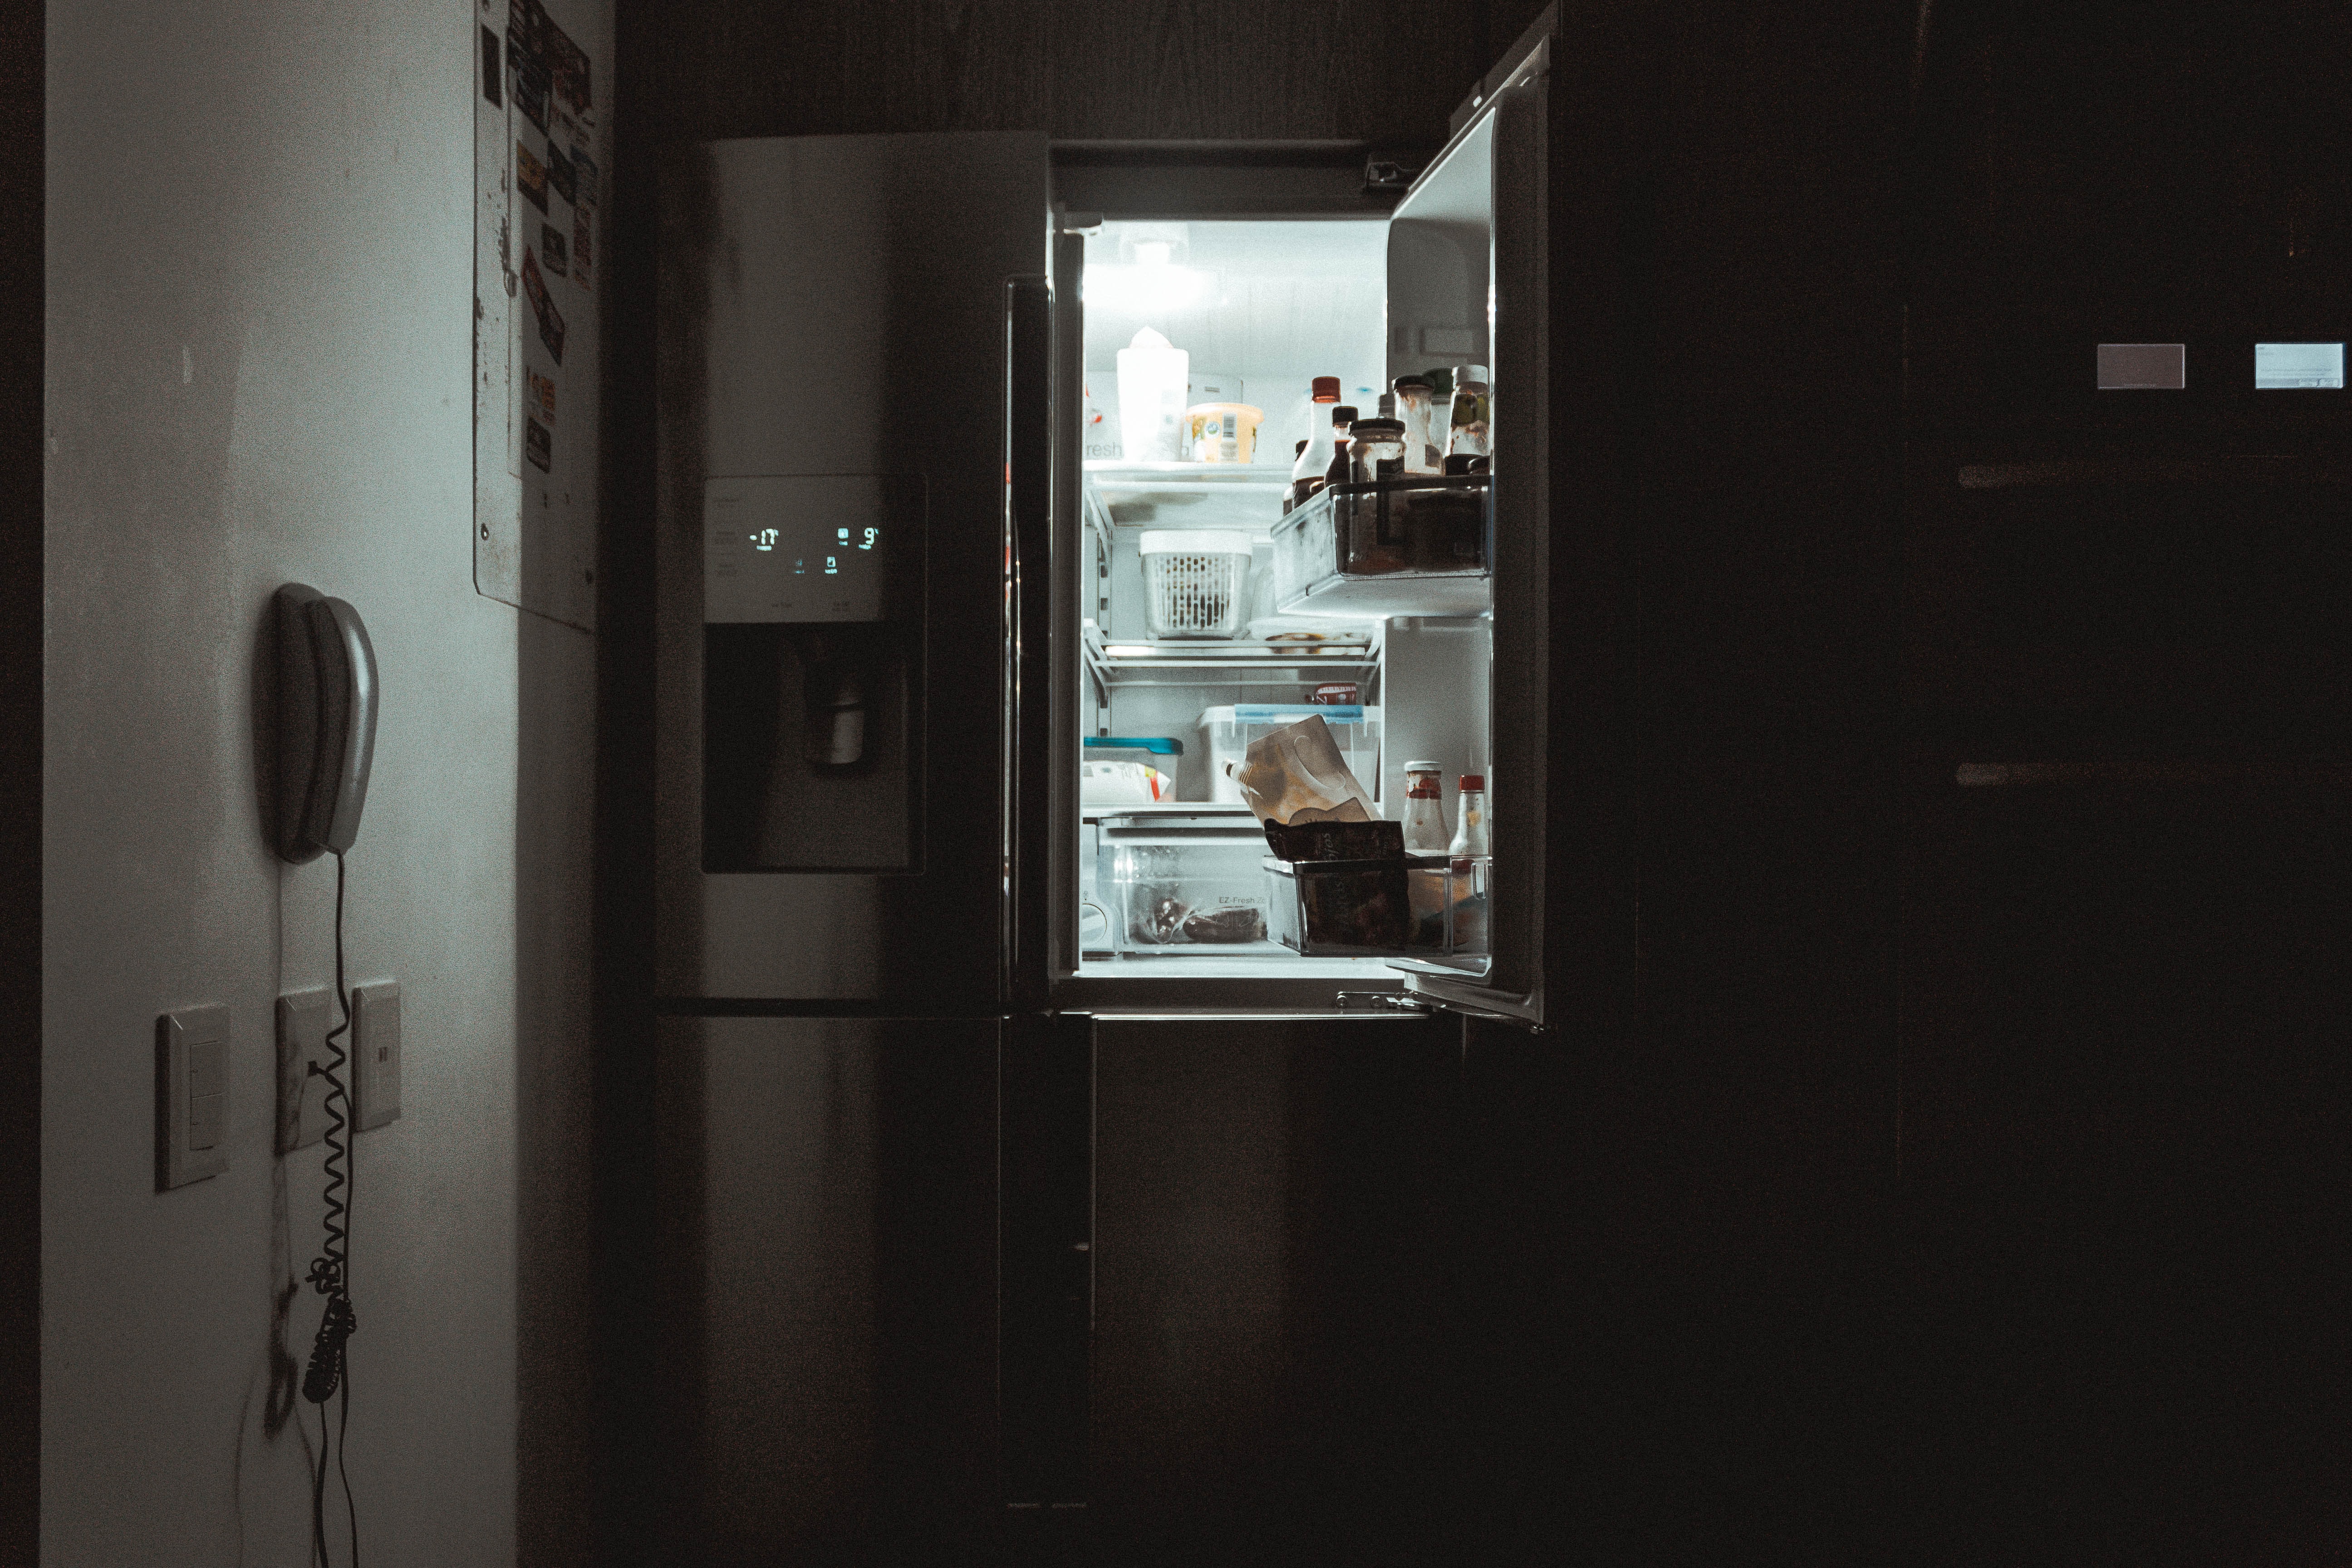 Open refrigerator door in a dark kitchen